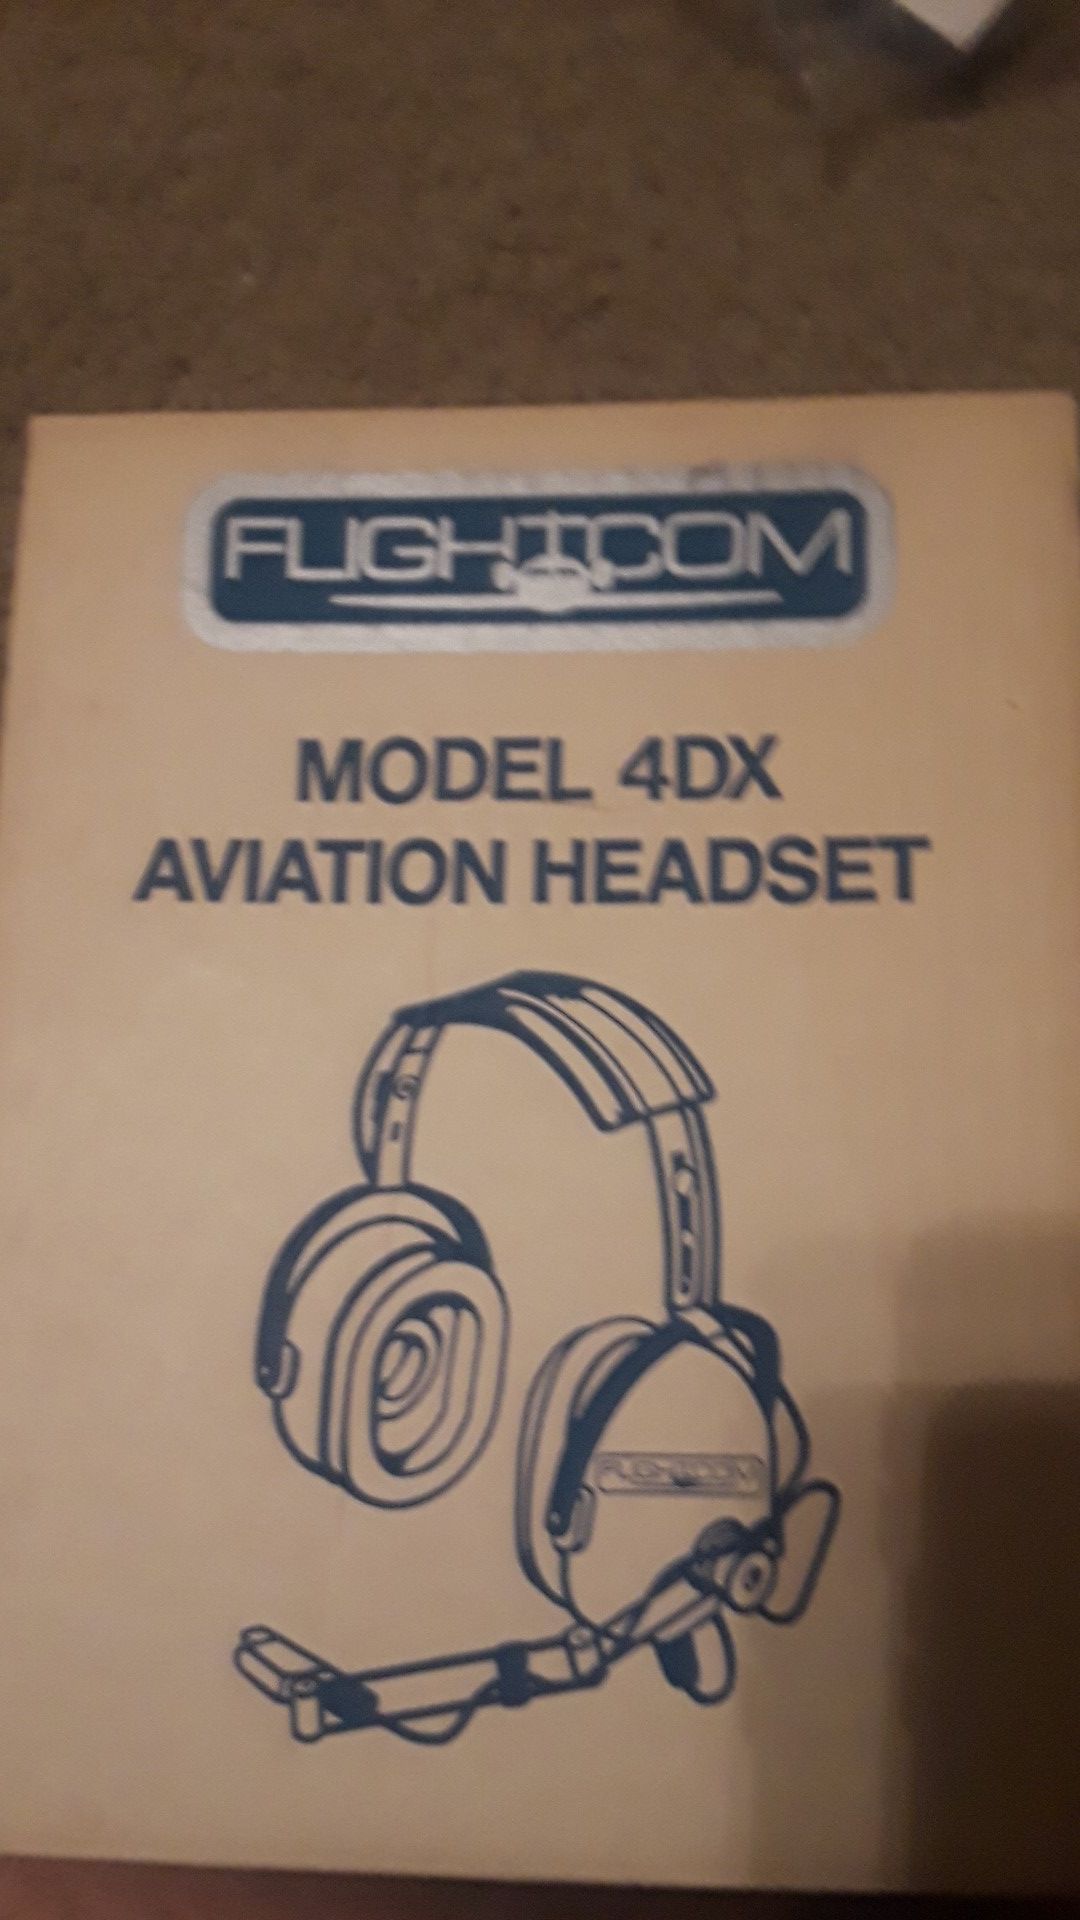 New model 4DX aviation headset